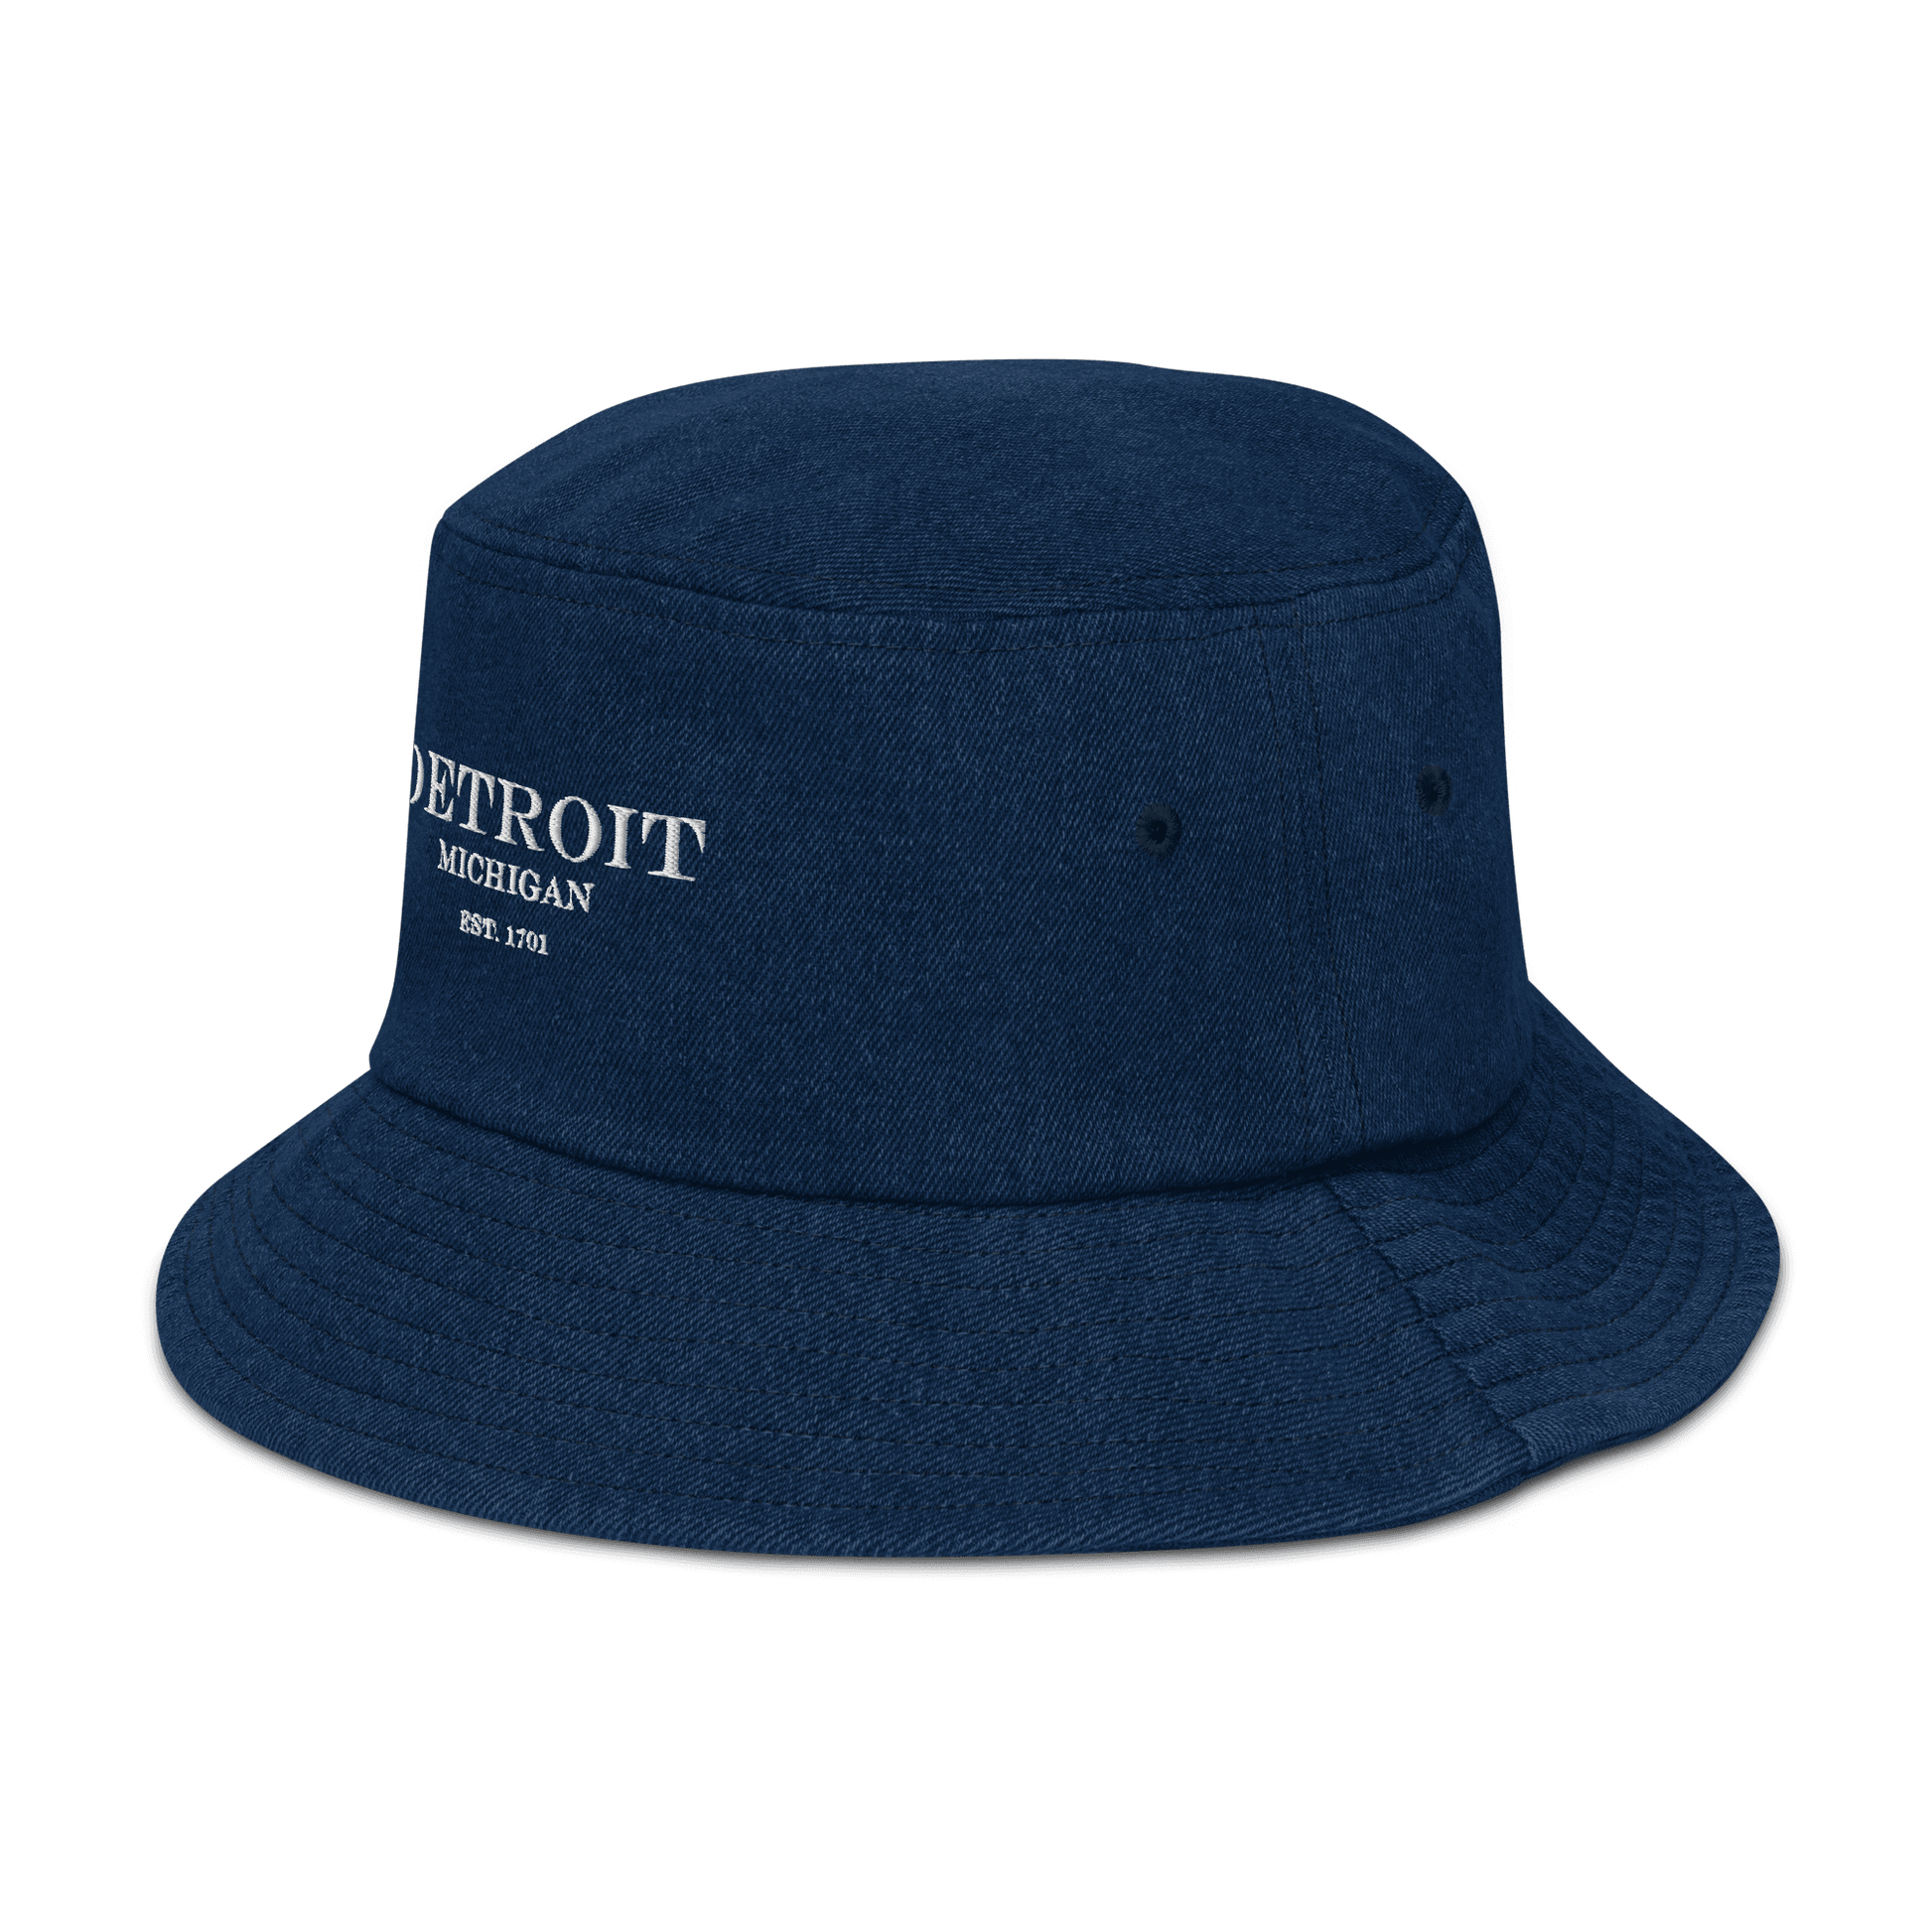 'Detroit Michigan Est. 1701' Denim Bucket Hat | White Embroidery - Circumspice Michigan